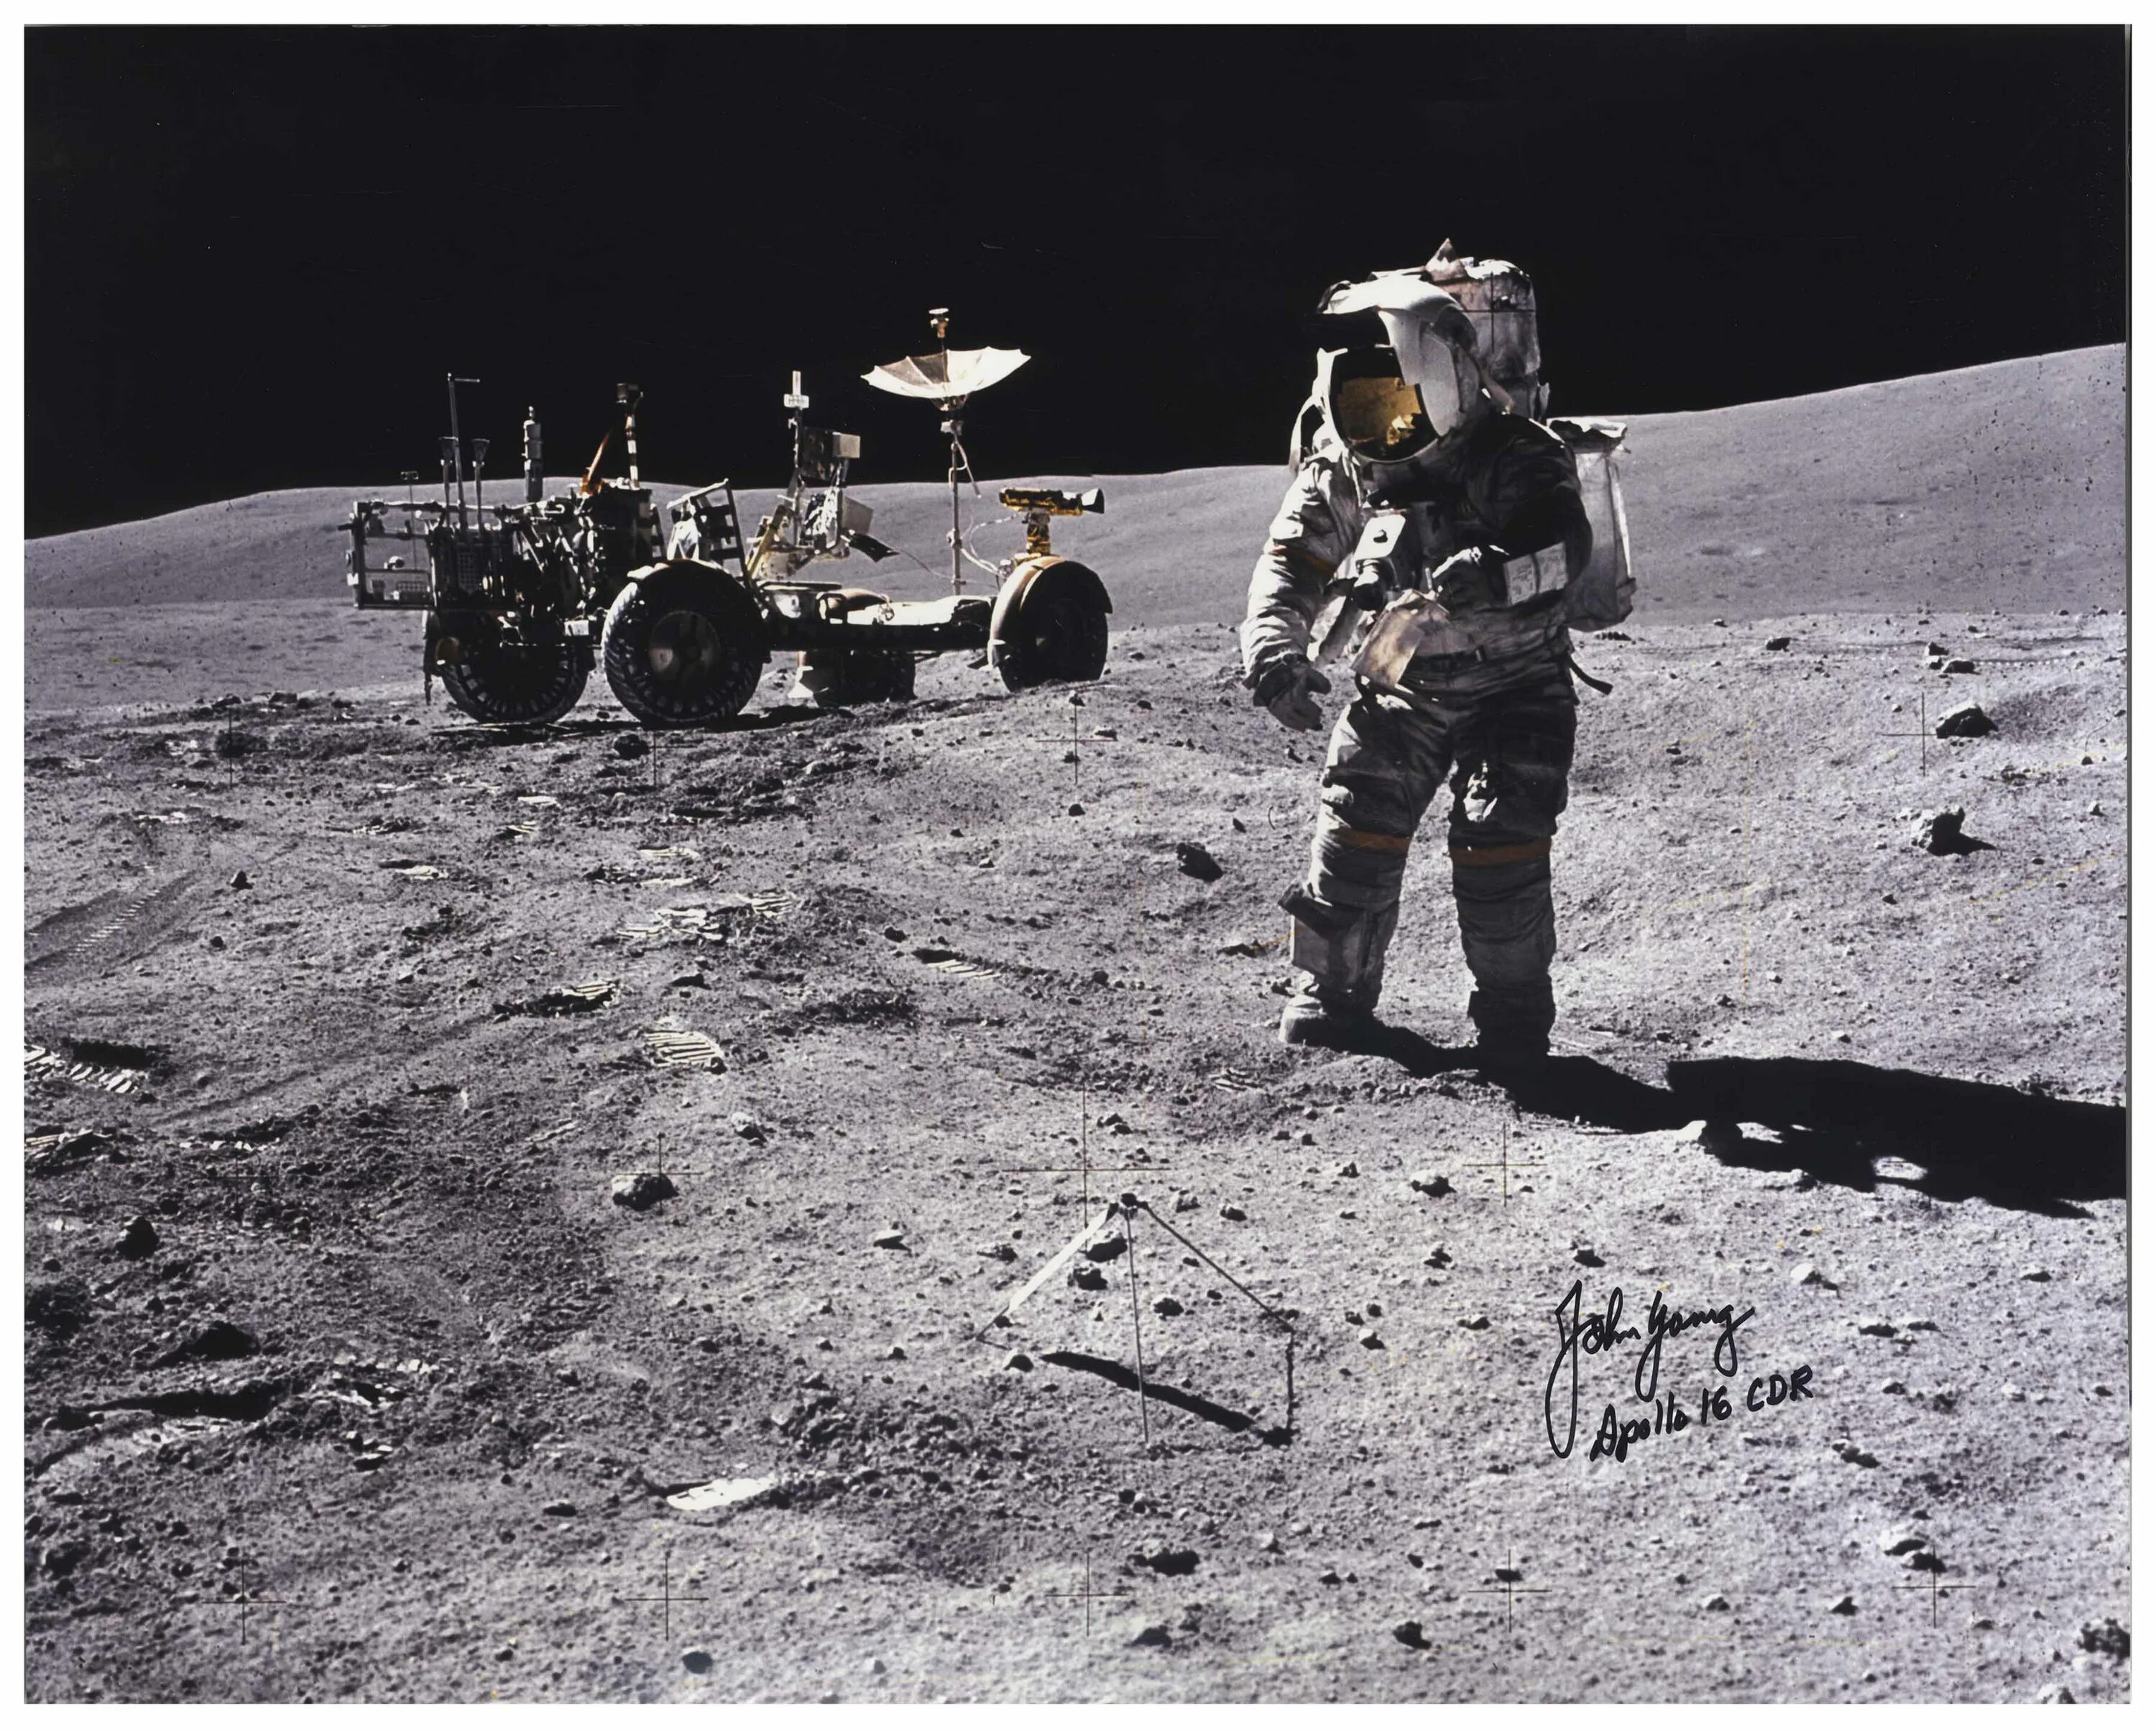 Аполлон 11 высадка. Аполло-14 астронавты на Луне. Миссия Аполлон 11. Американцы на Луне 1969.